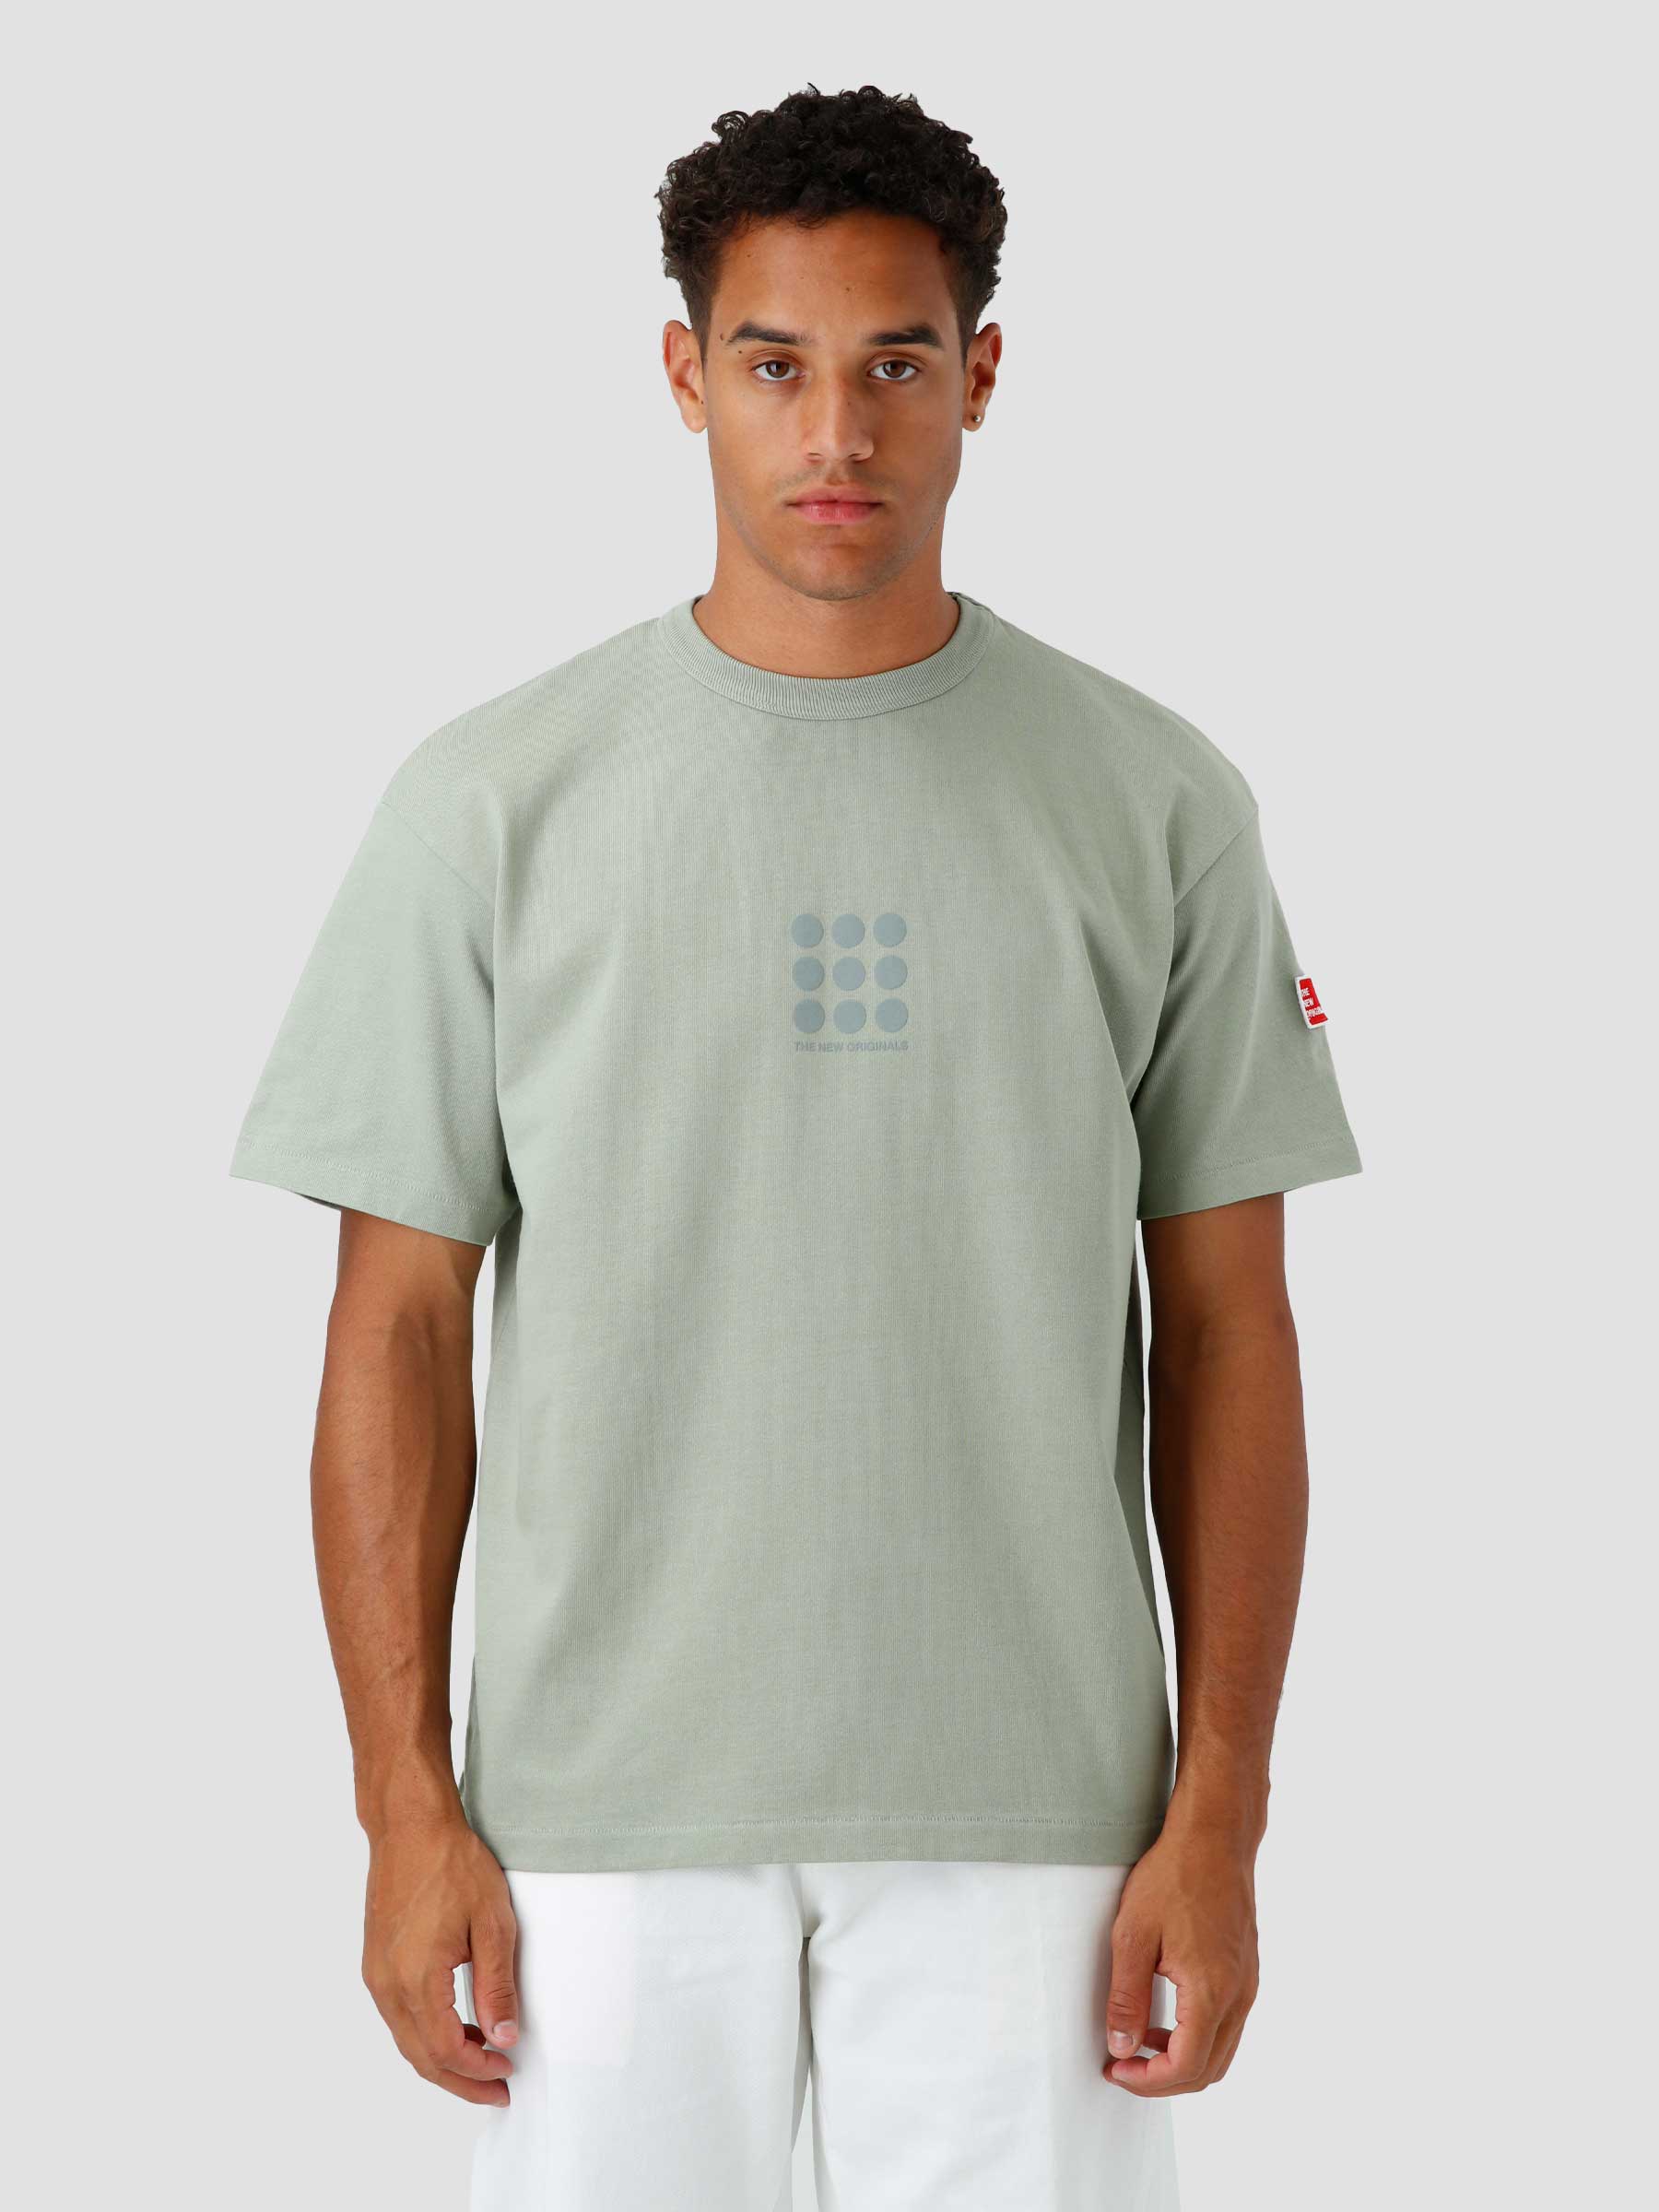 9-Dots T-shirt Seagrass TNO.212.9D.100